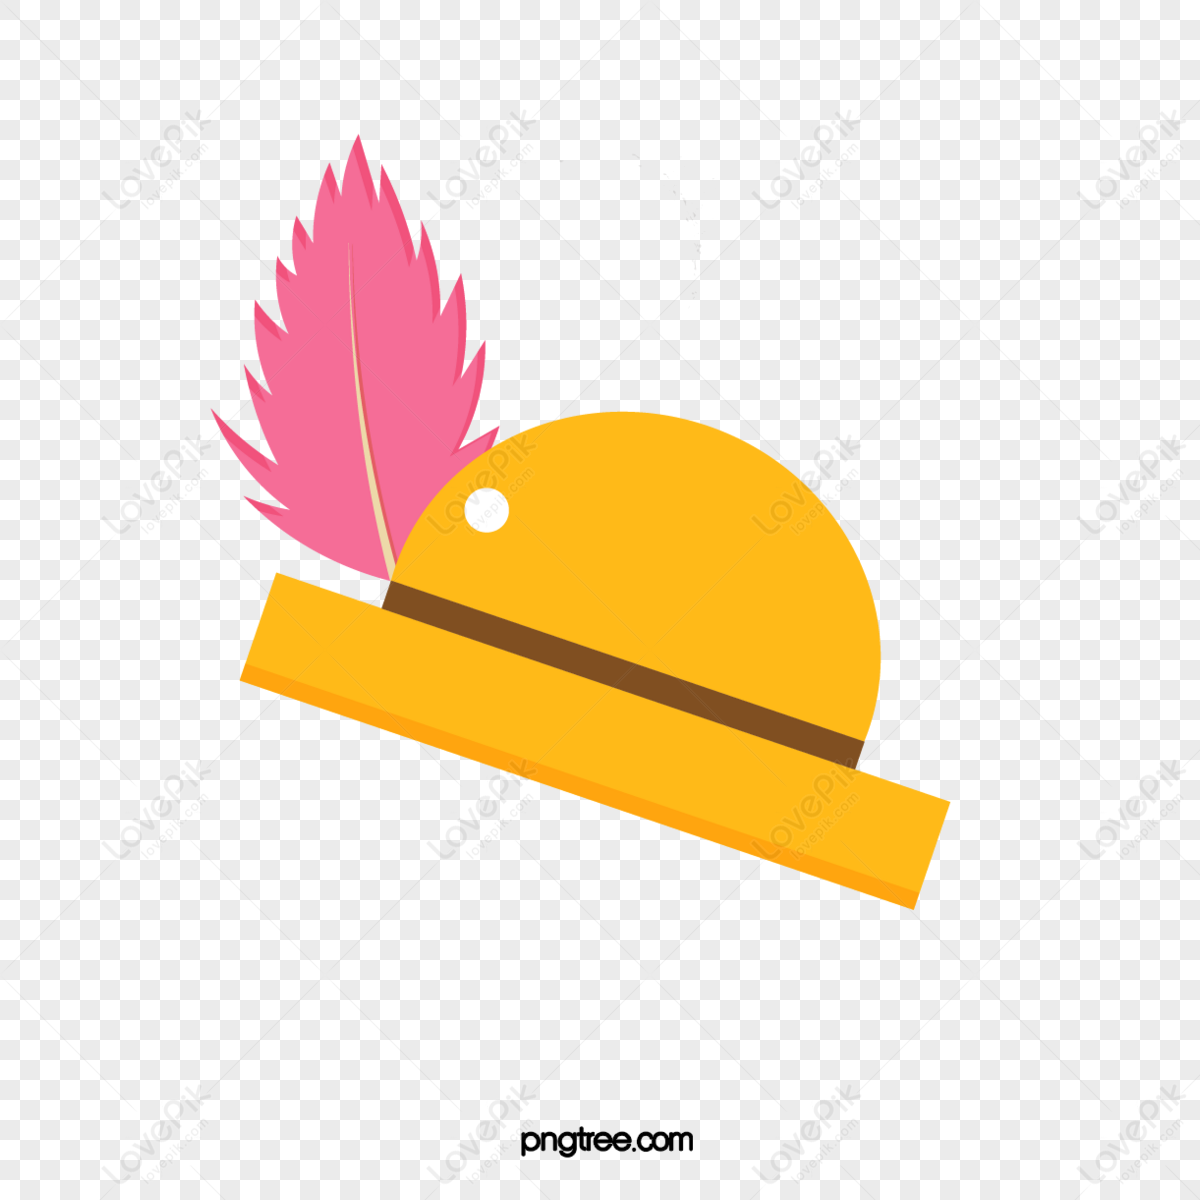 Cartoon hat happy princess decoration hat,decorative cartoon,decorative hat png image free download